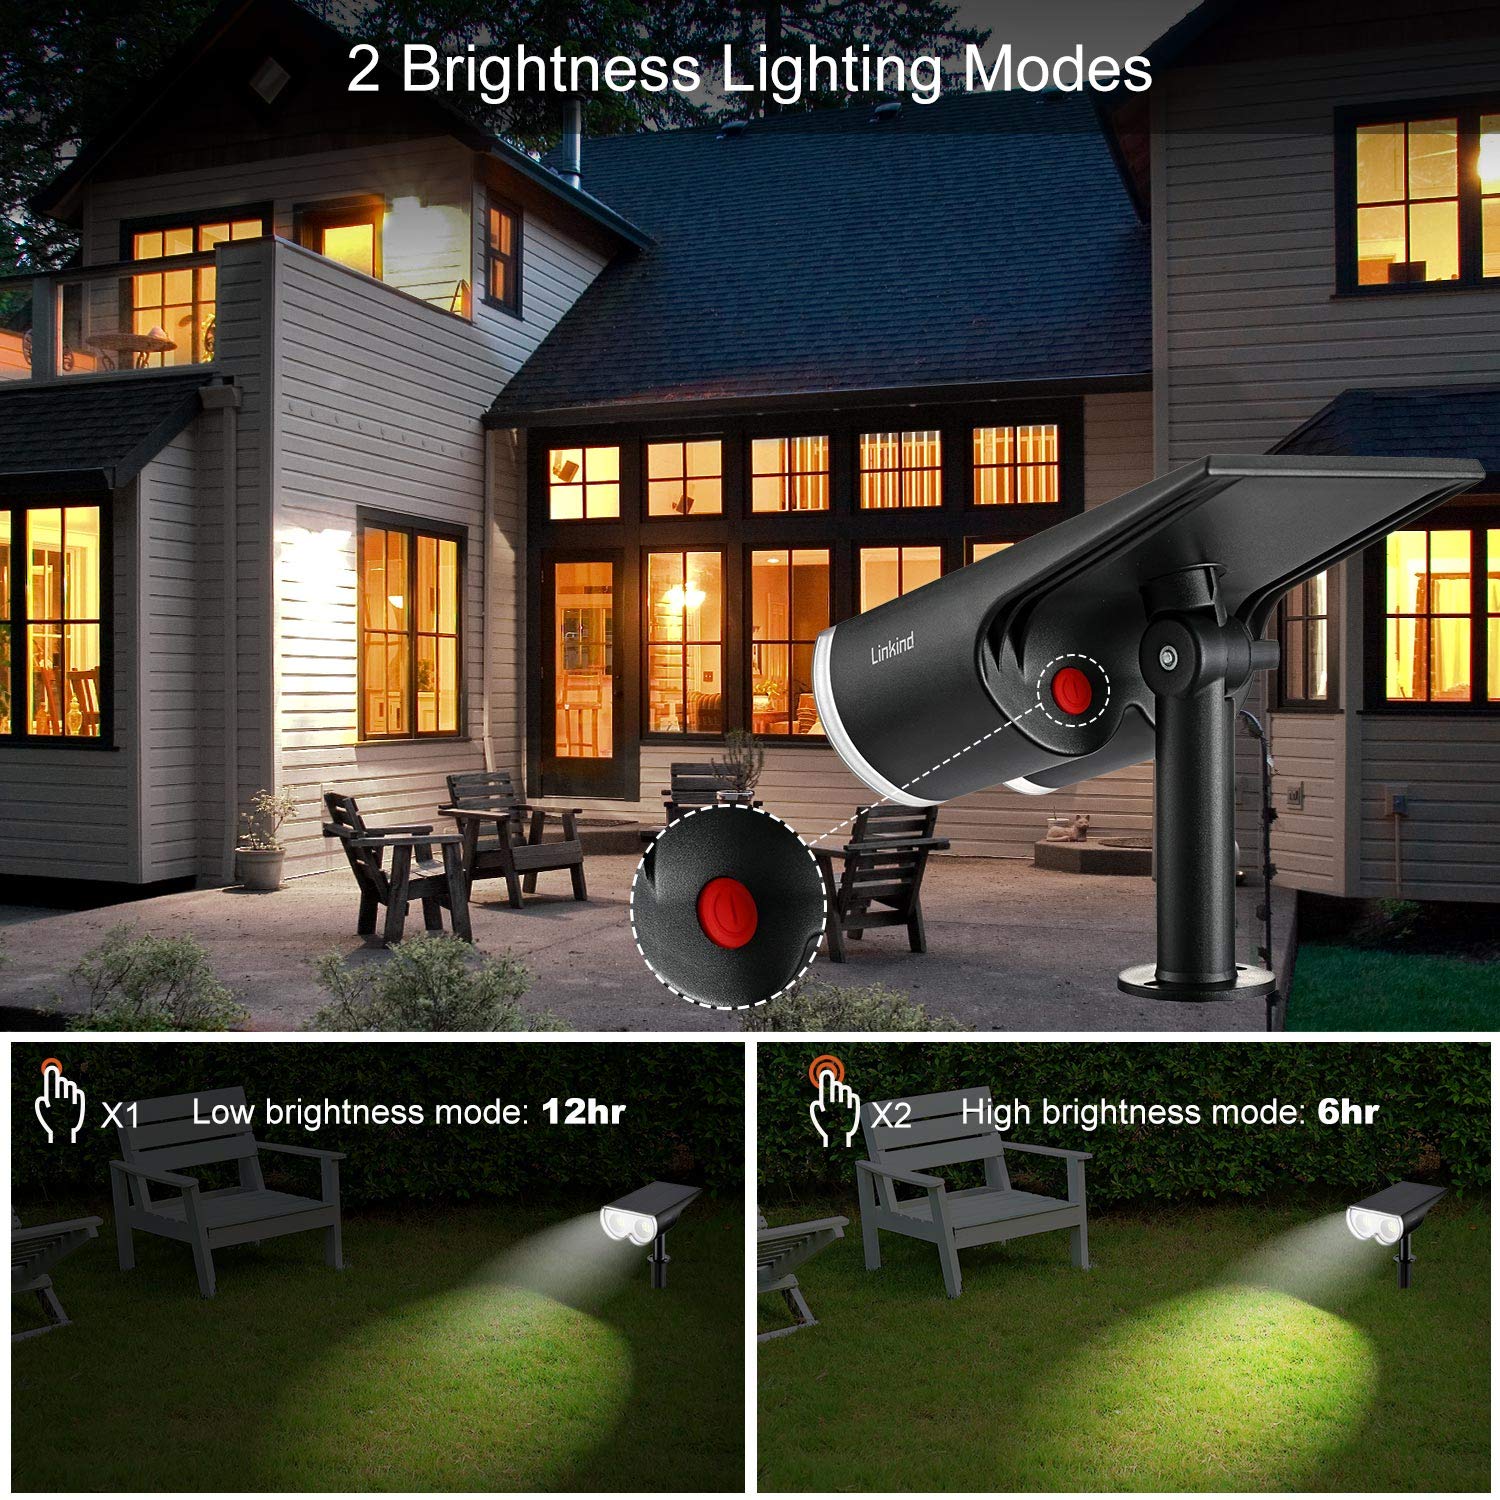 Linkind StarRay Solar Spot Lights Outdoor, 16 LEDs IP67 Waterproof Dusk-to-Dawn Landscape Spotlights, 6500K Daylight Wall Lights for Garden Yard Driveway Walkway, 4 Pack